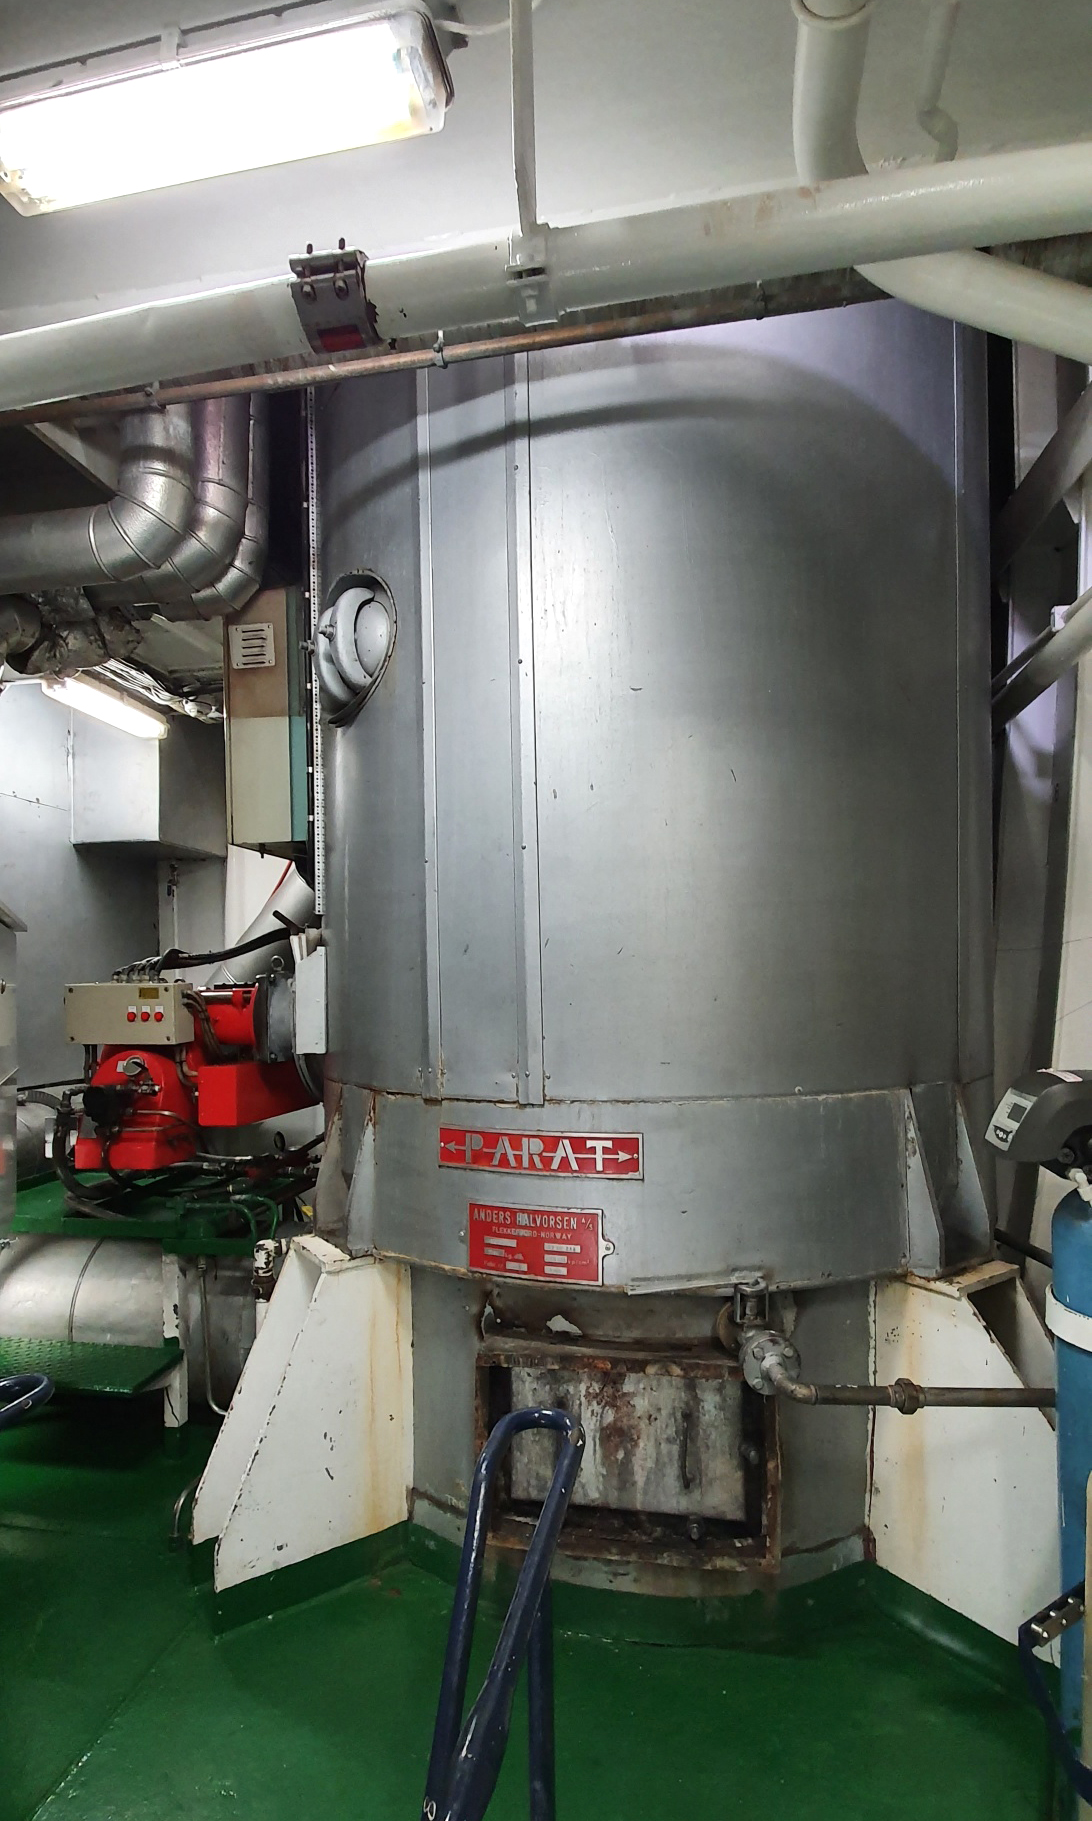 PARAT Halvorsen delivers new Retrofit Combined Boiler to Sanford in New Zealand